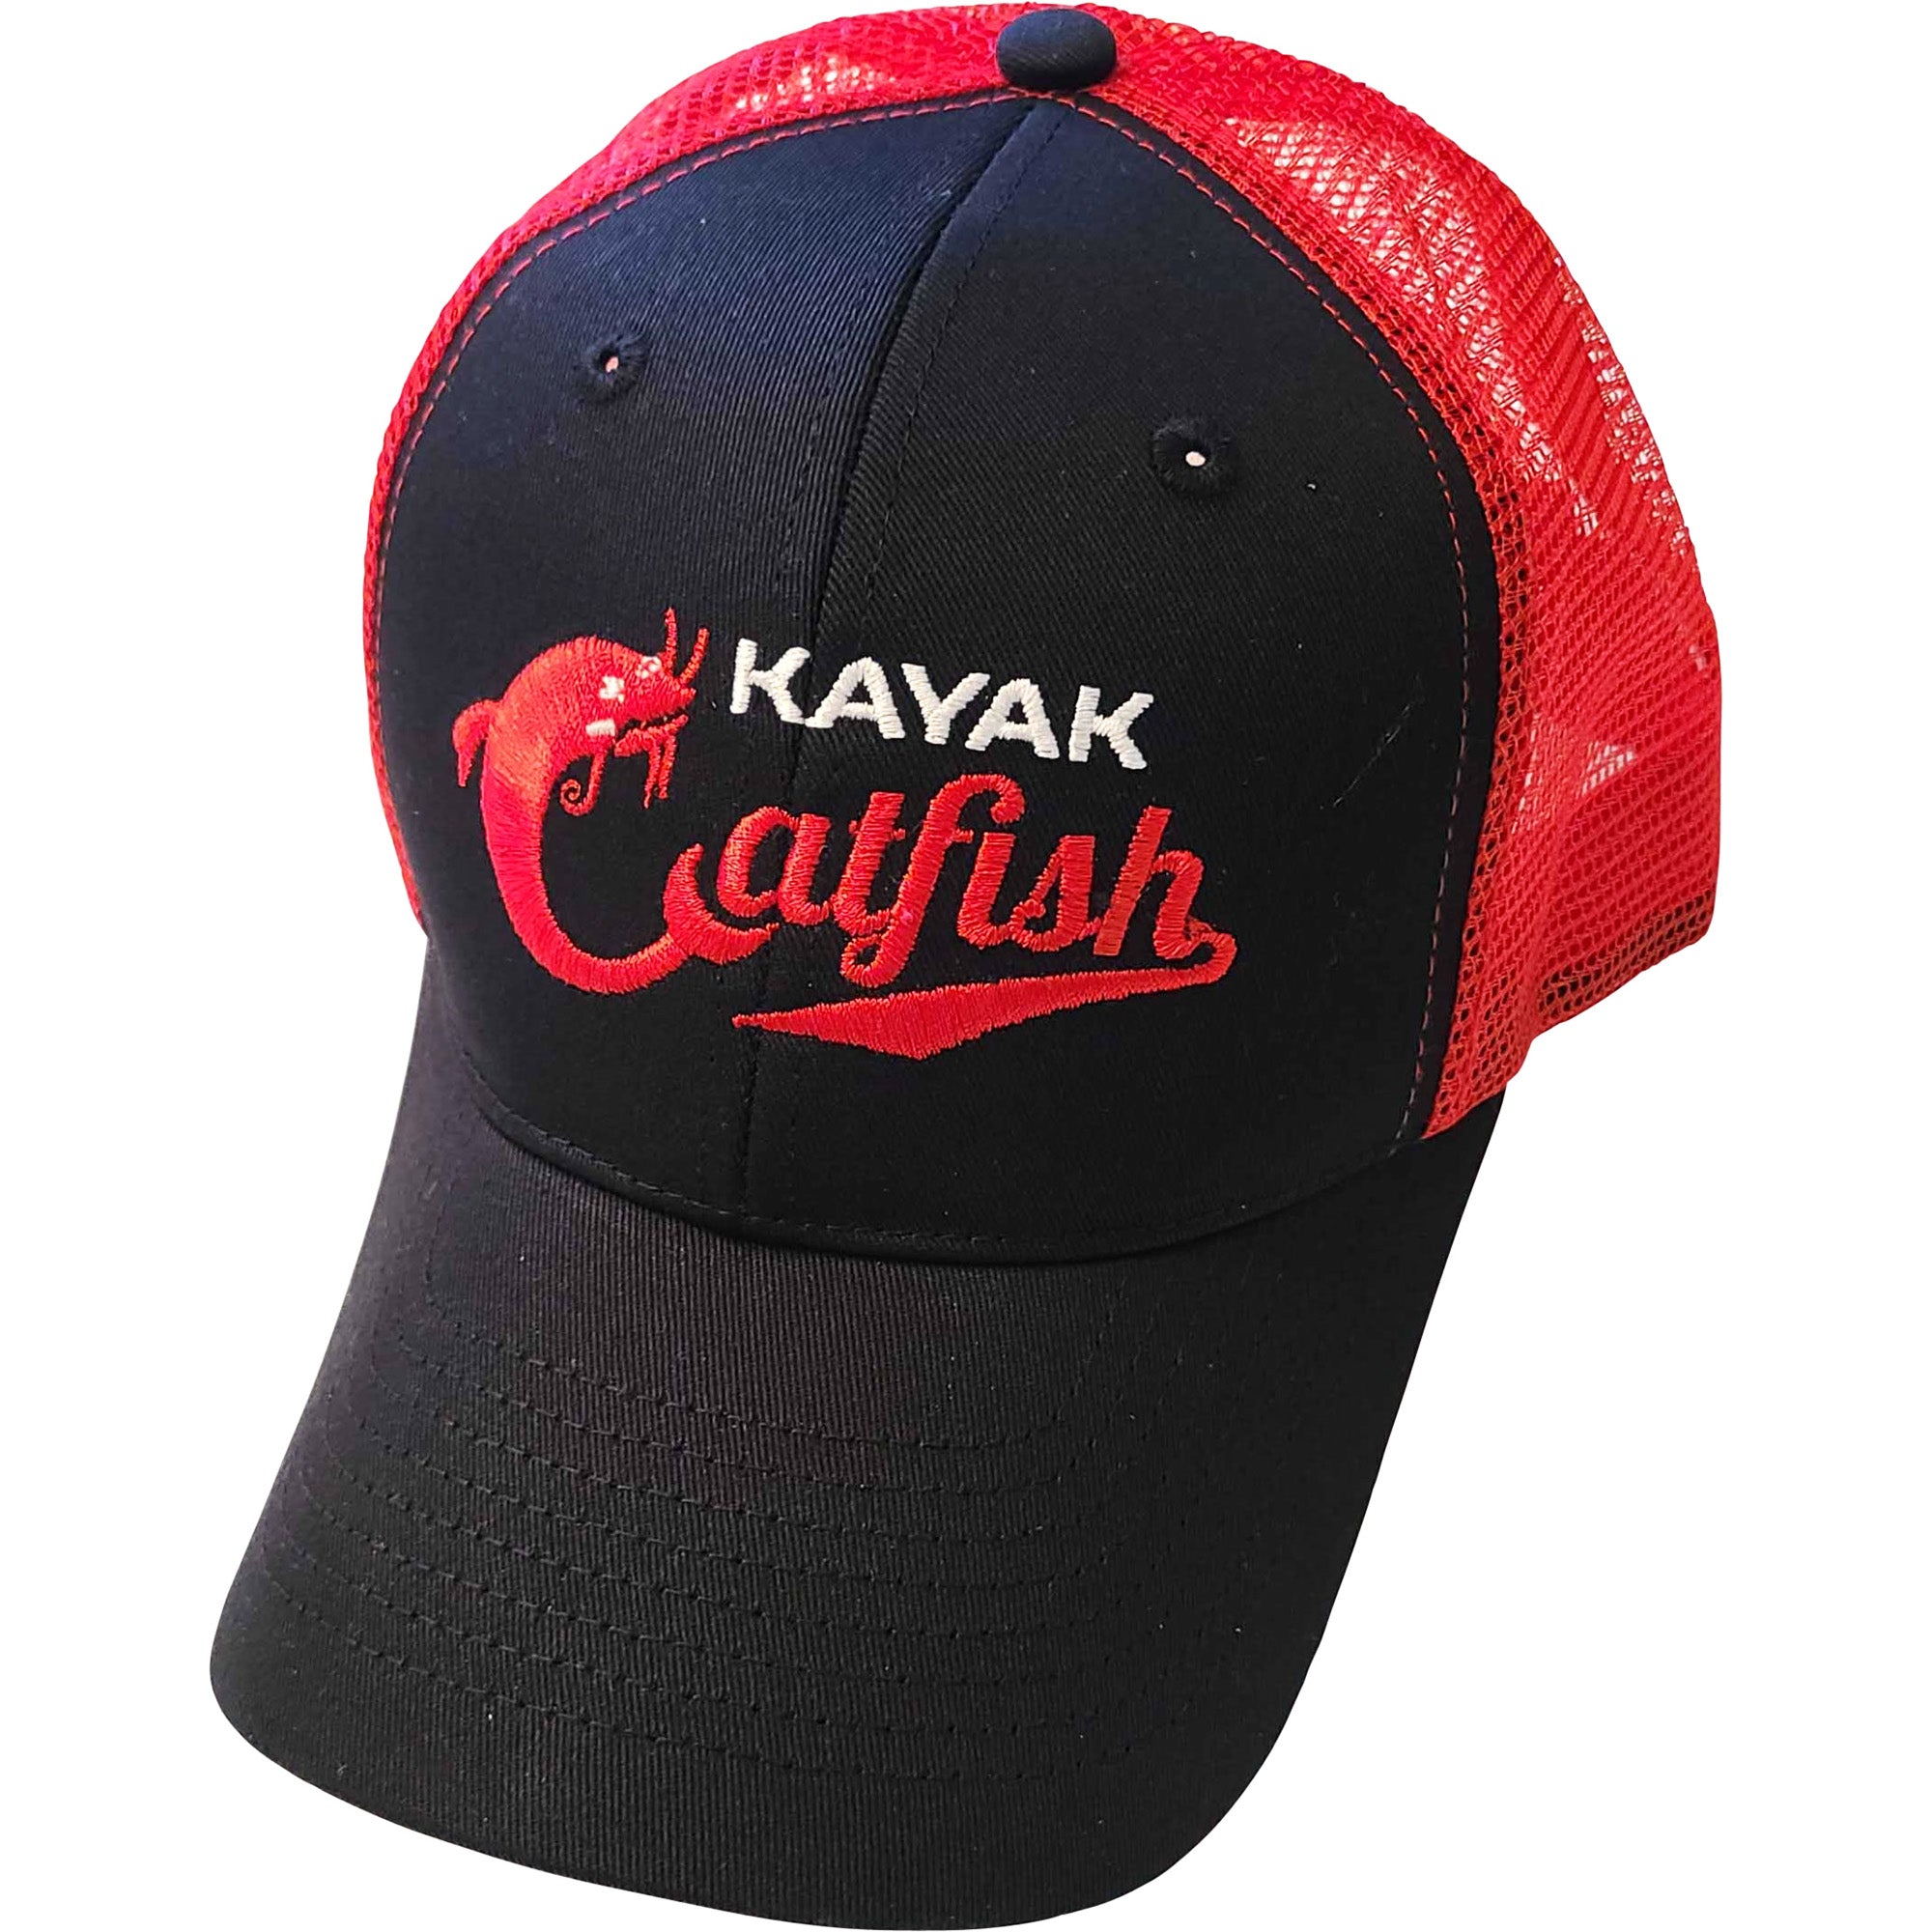 I Like 'Em Big Fishing Trucker Hat | Trendy Fish Hat | Summer Cap | Camping Trip Attire | Funny Fishing Hat | Fishing Clothing for Women